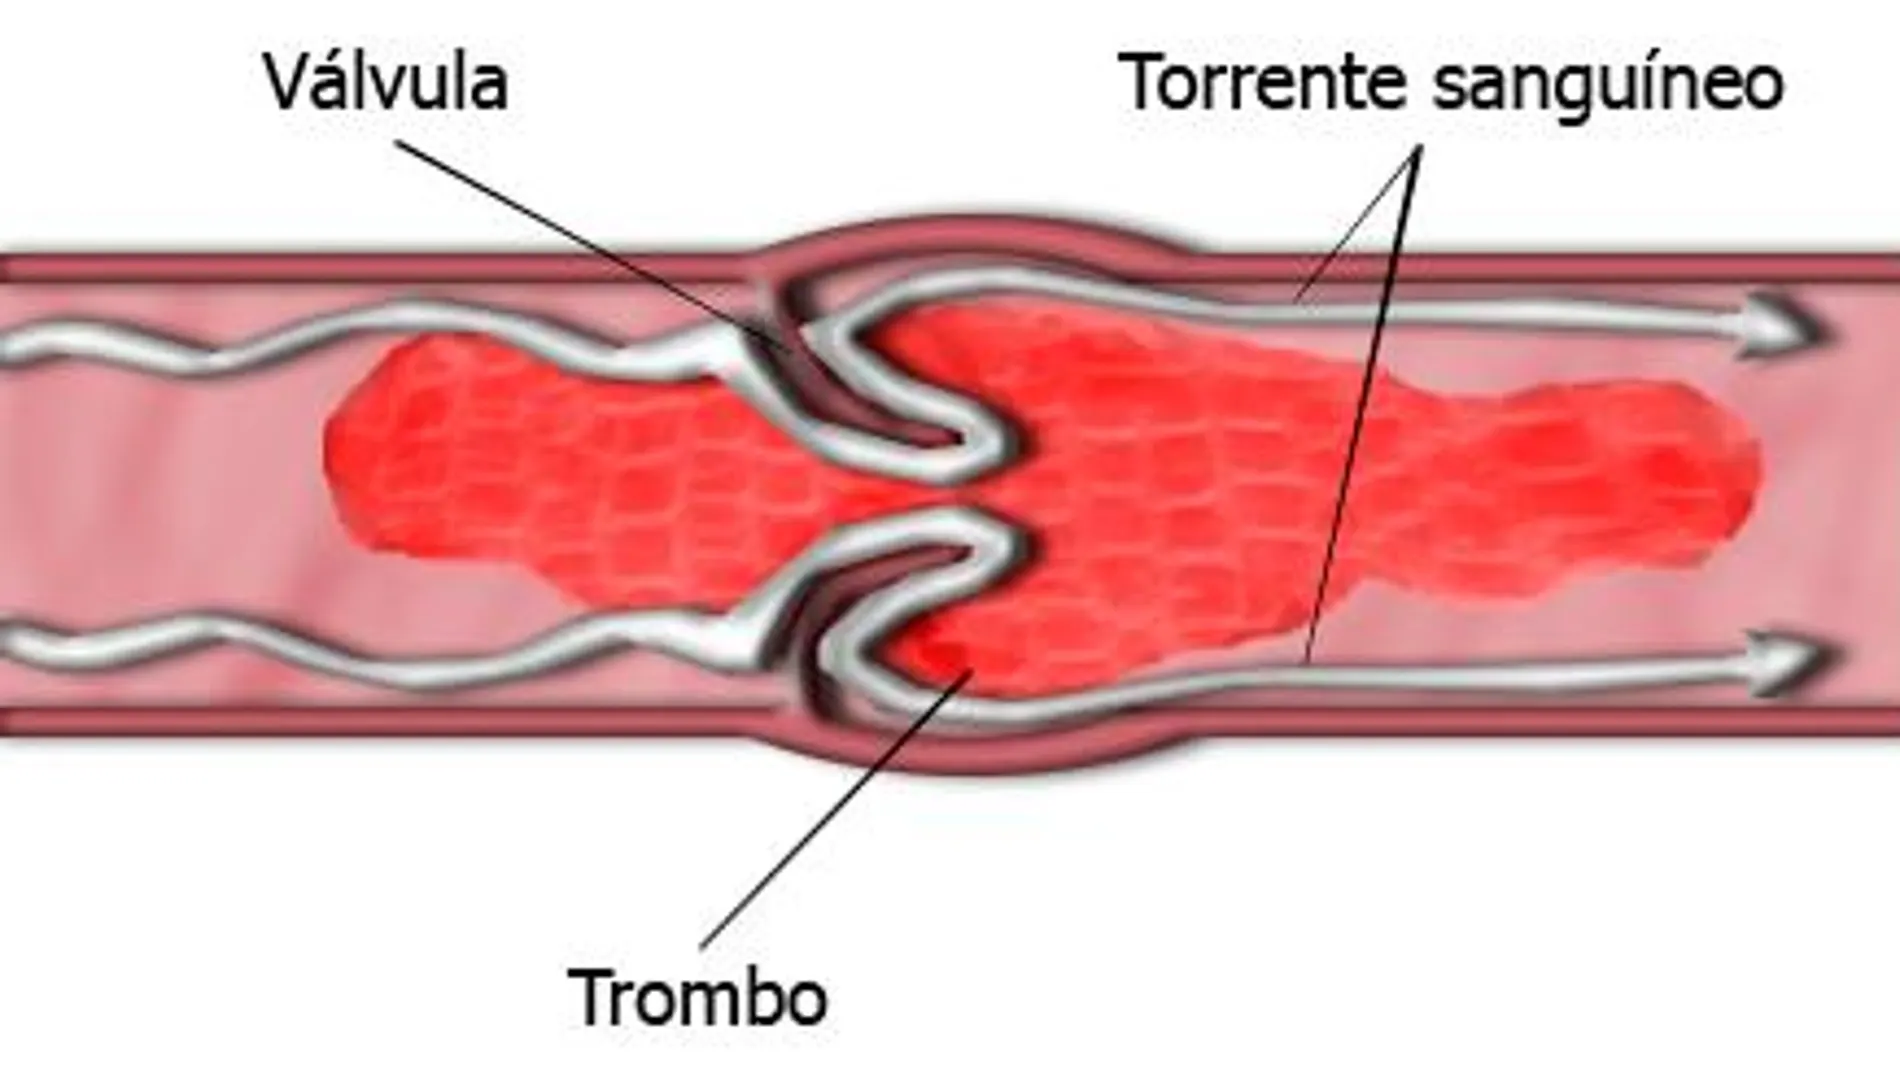 Trombofilia